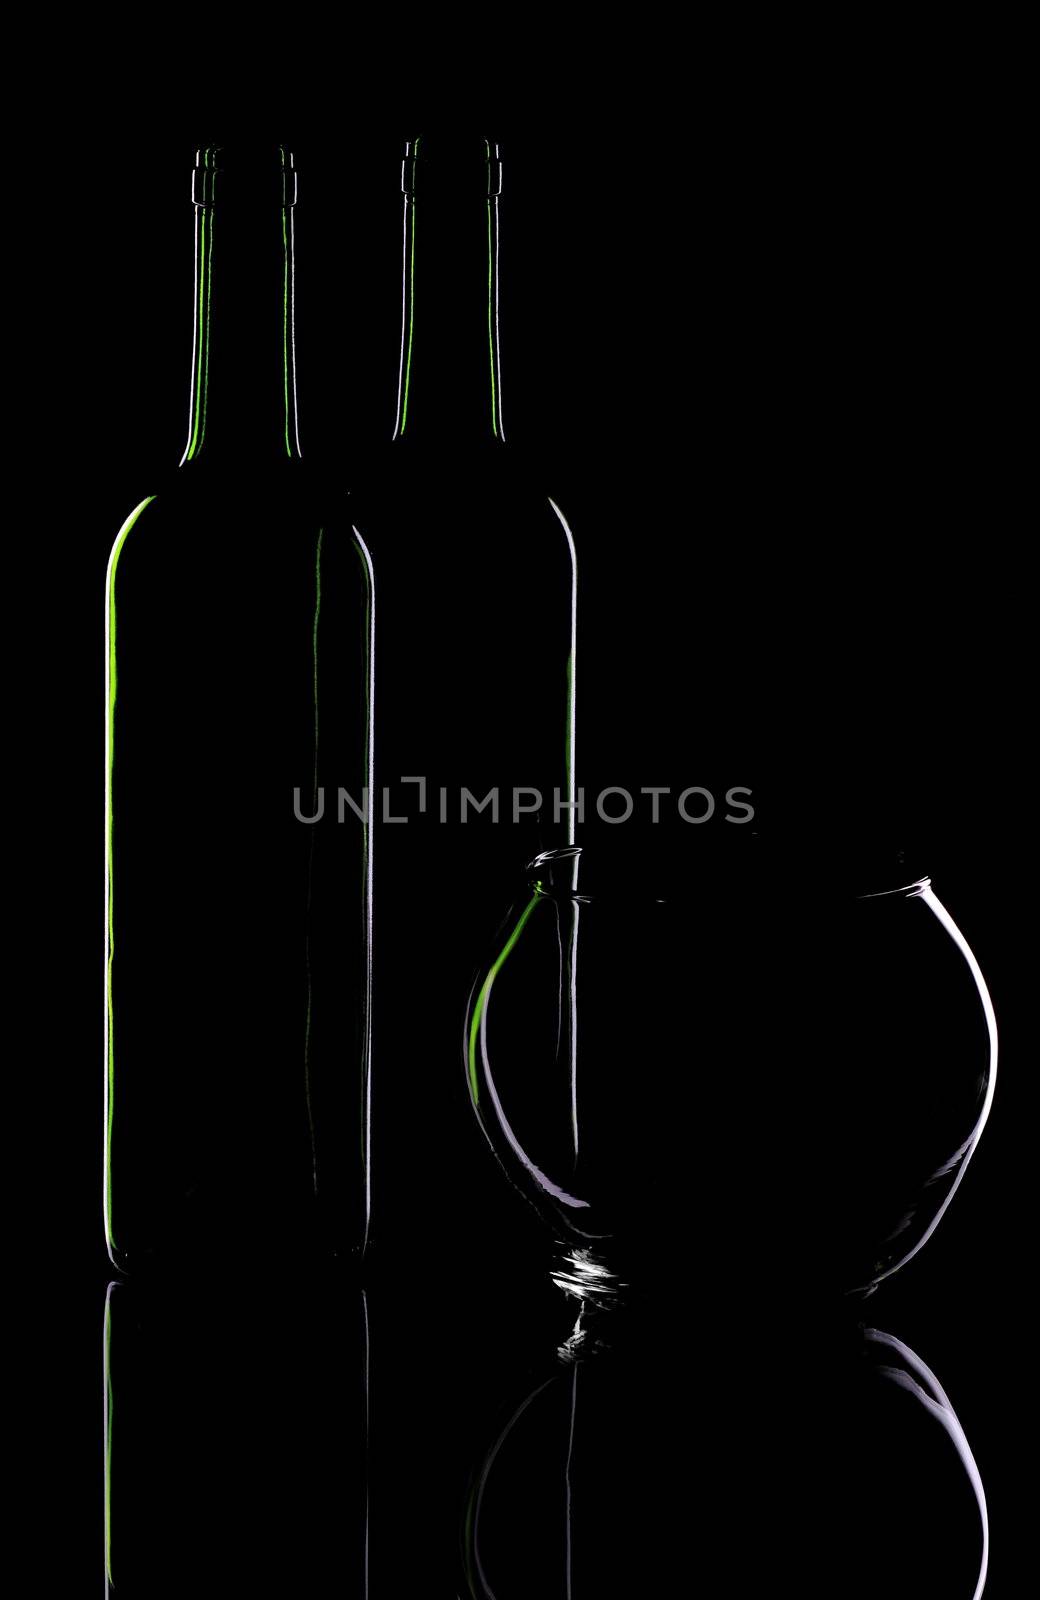 Wine bottle and glass vase on a black background